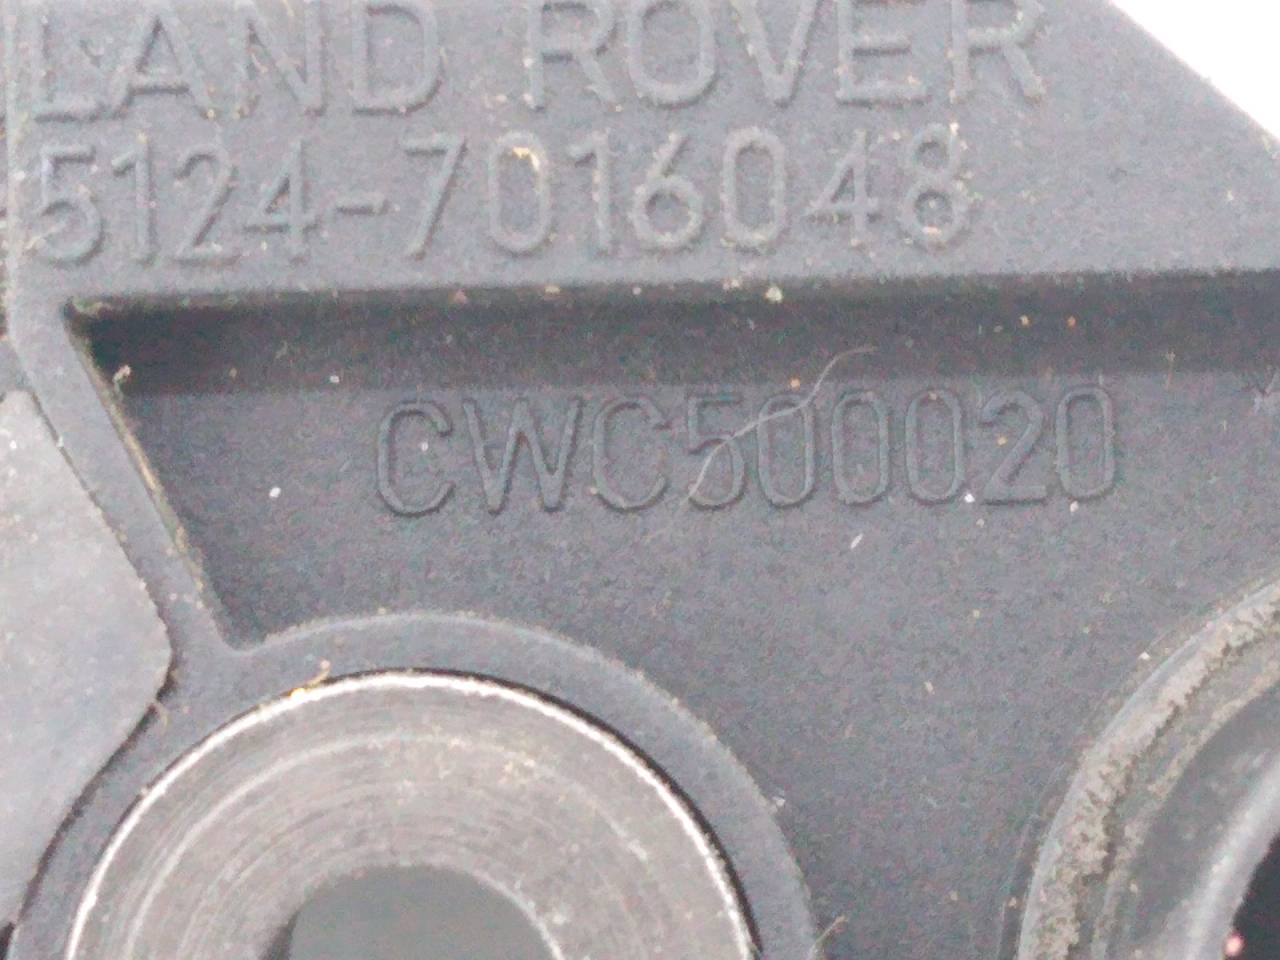 LAND ROVER Discovery 3 generation (2004-2009) Замок крышки багажника CWC500020, 51247016050, E1-B4-7-2 24032861